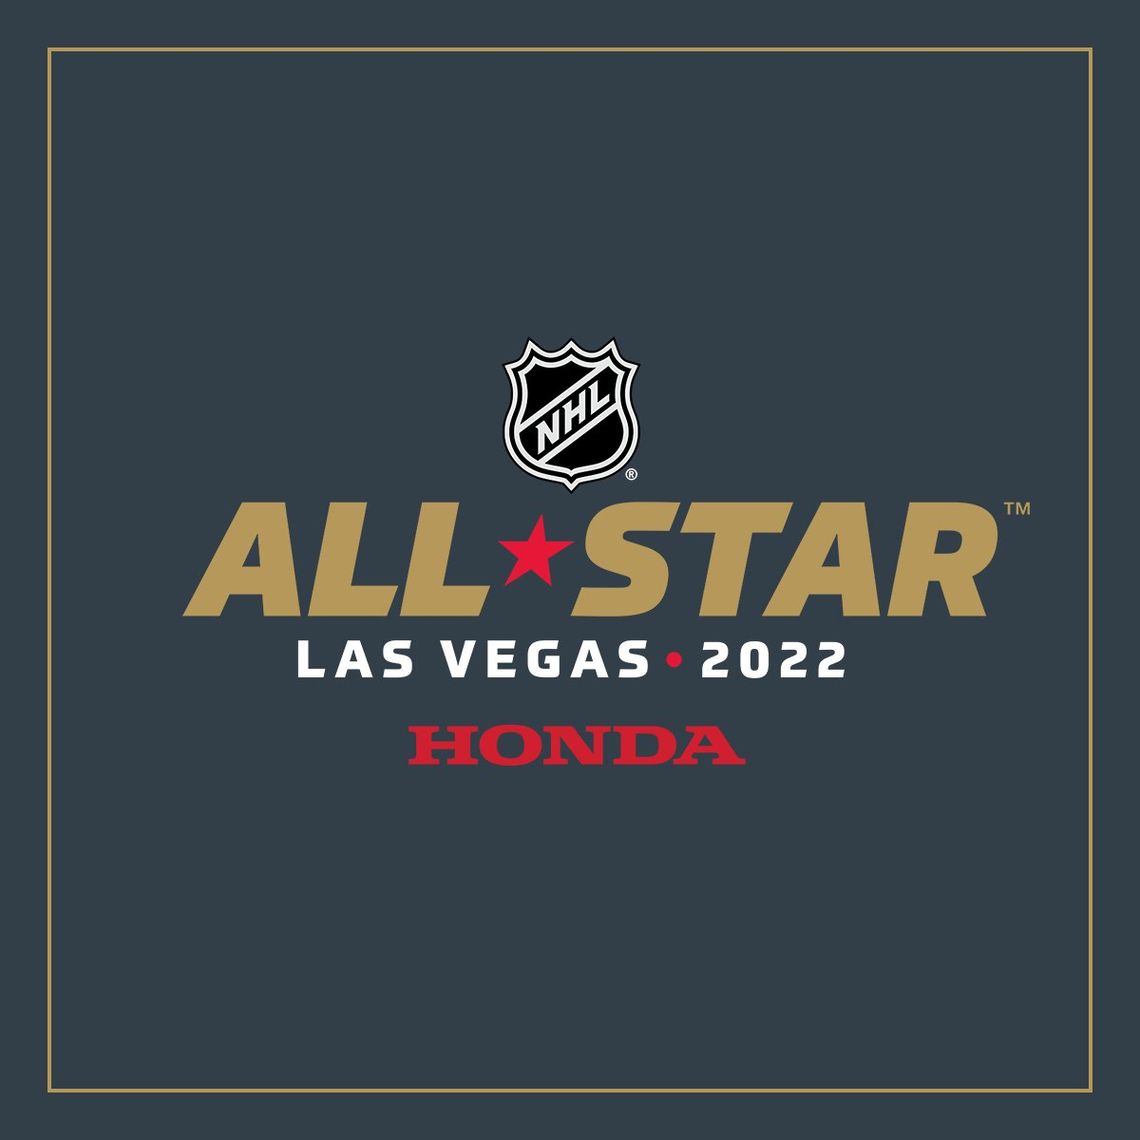 Las Vegas to Host 2022 NHL All-Star Game